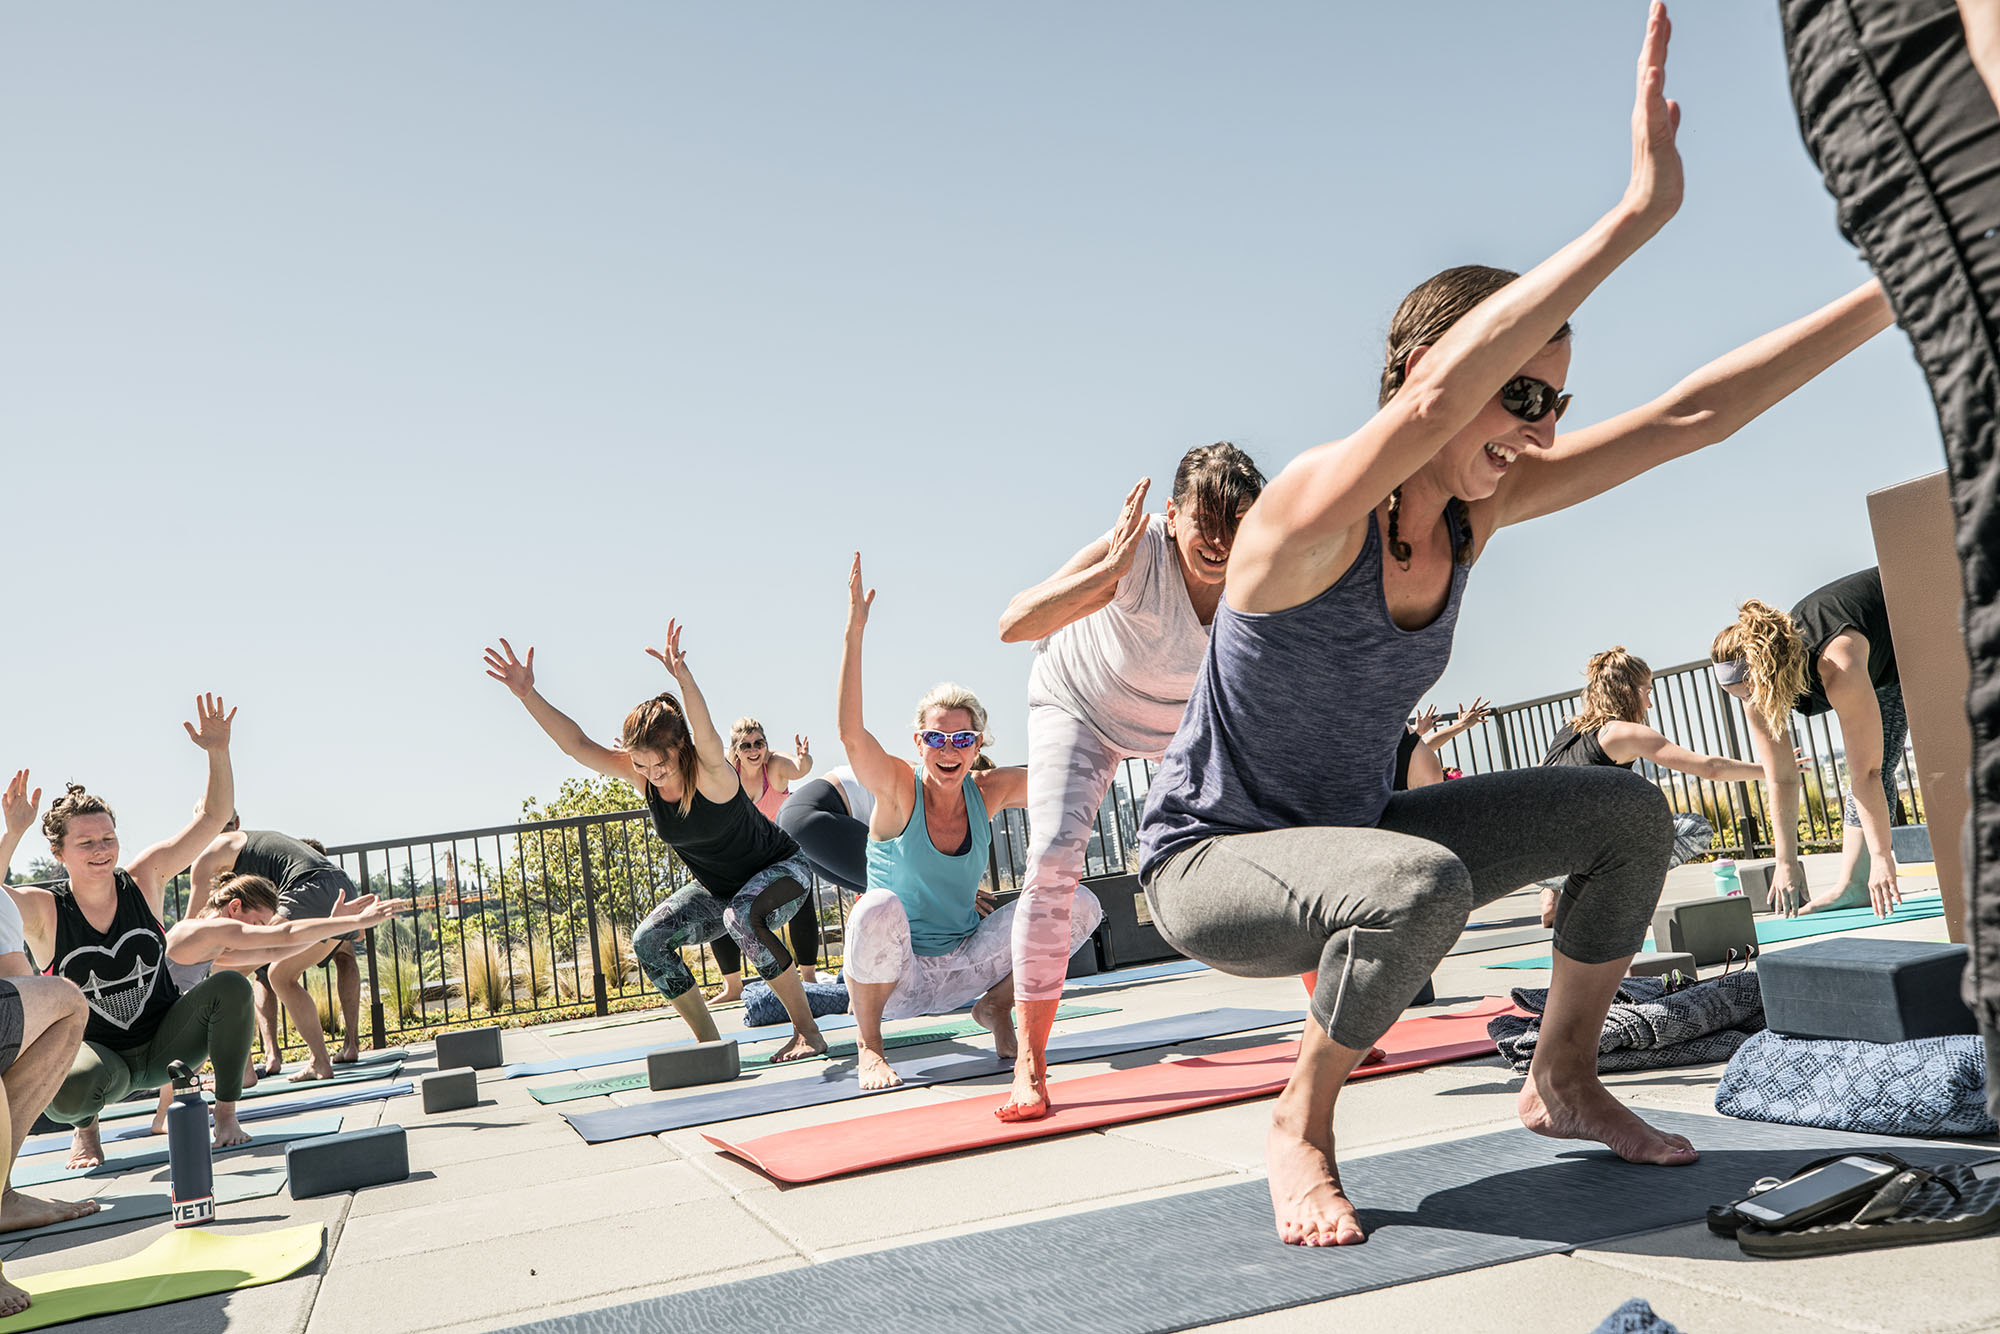 Rooftop Yoga Sessions & Potluck BBQ, May 9 & May 10